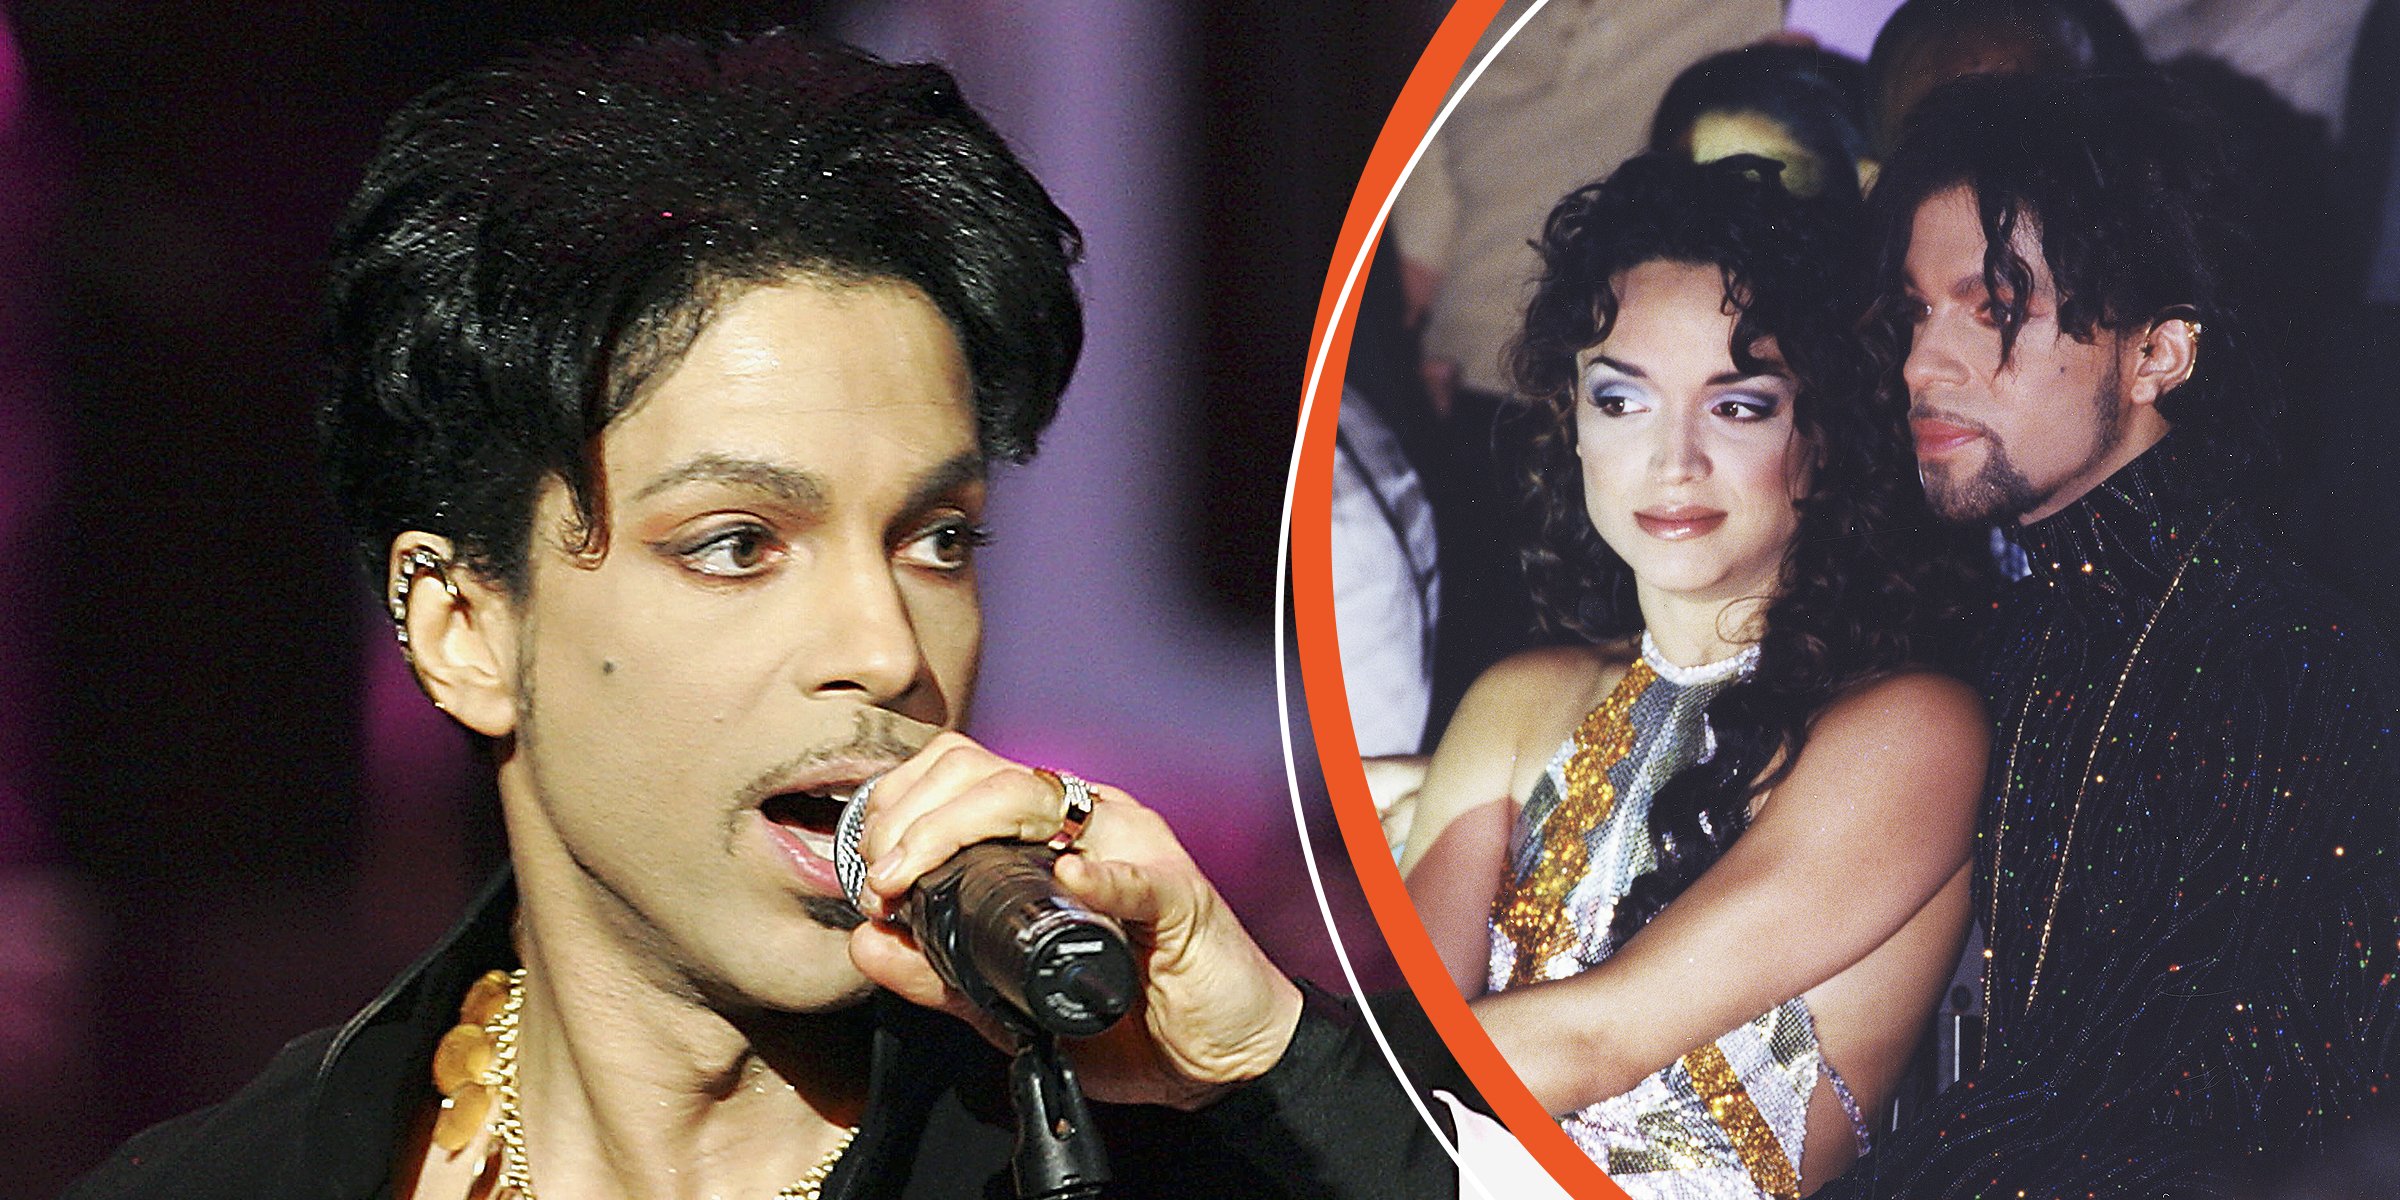 Prince | Mayte Garcia und Prince | Quelle: Getty Images